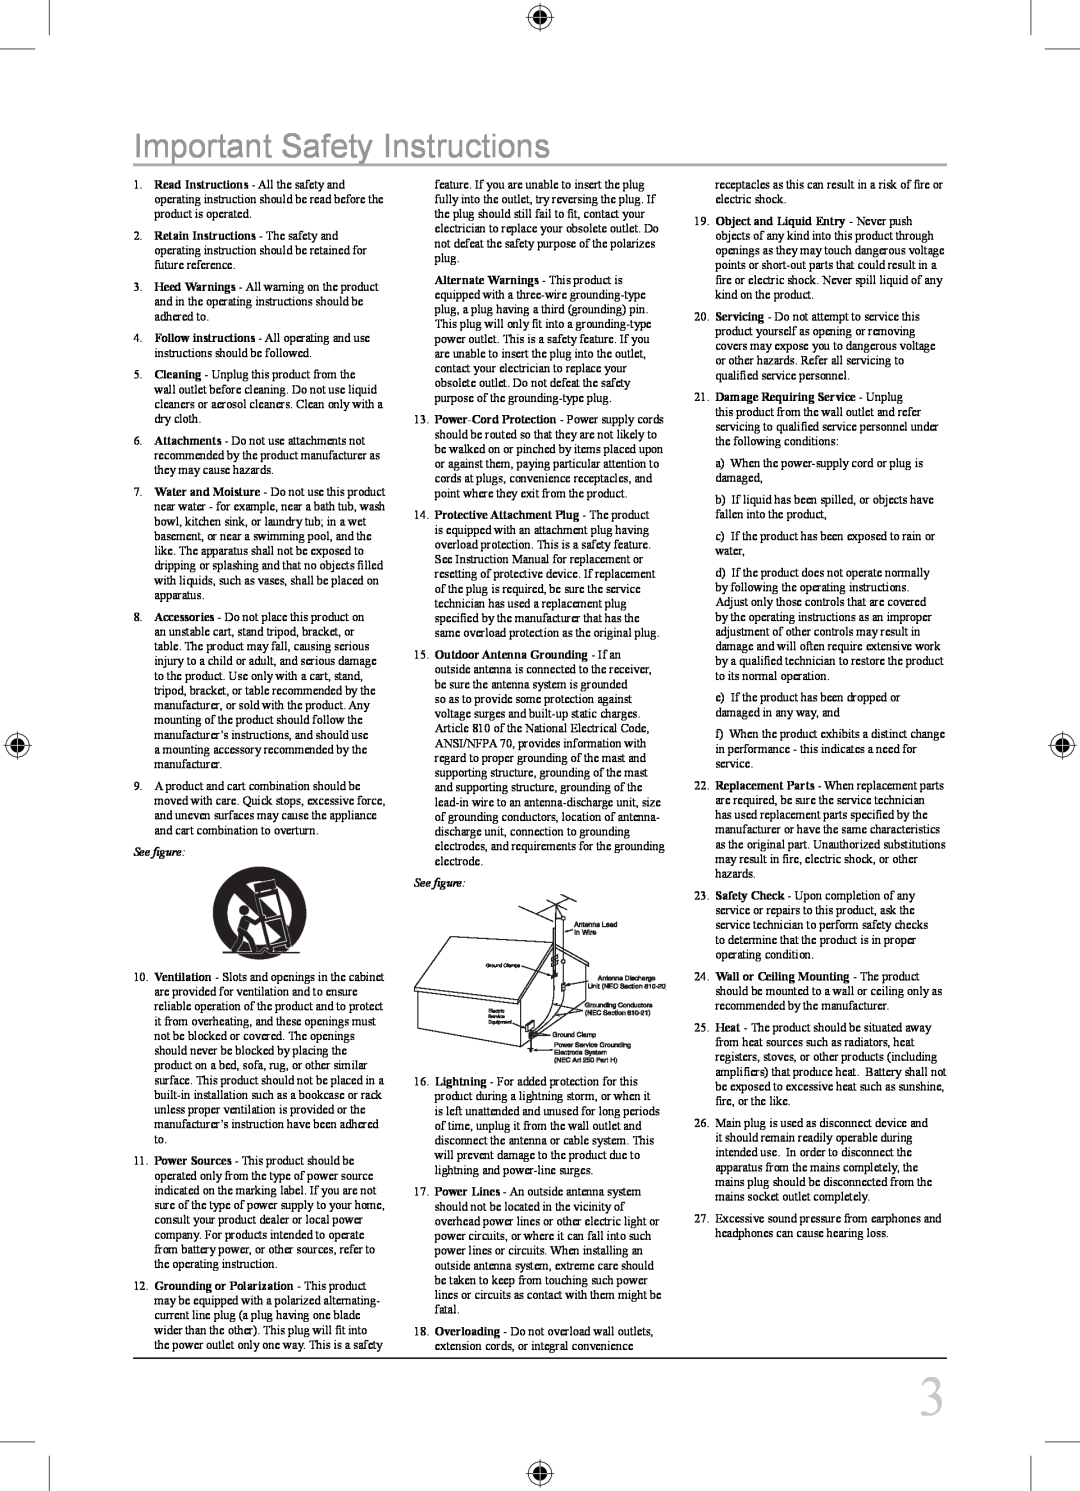 Sylvania SPA021 instruction manual Important Safety Instructions, See ﬁgure 